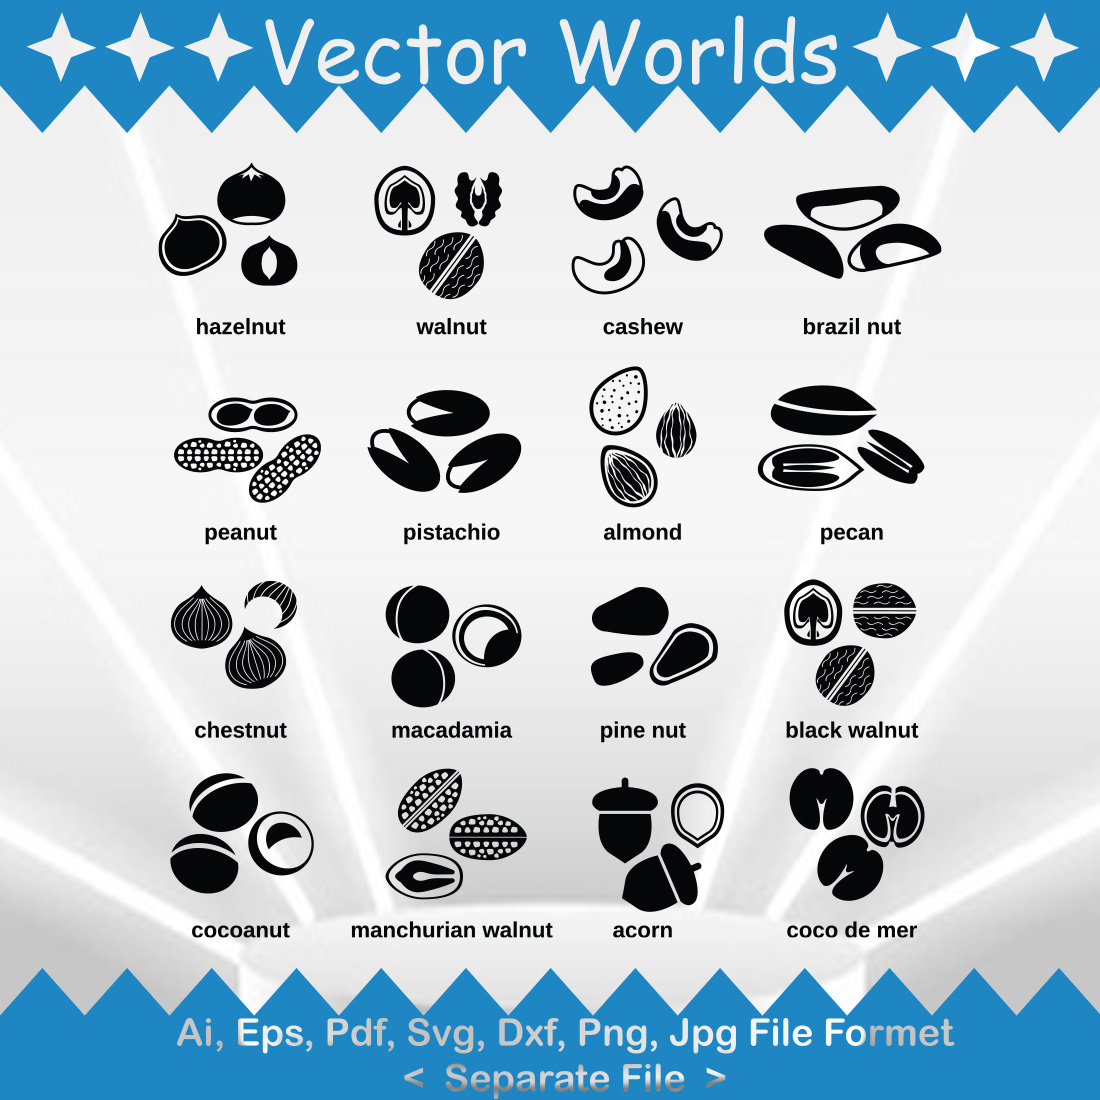 Nut SVG Vector Design cover image.